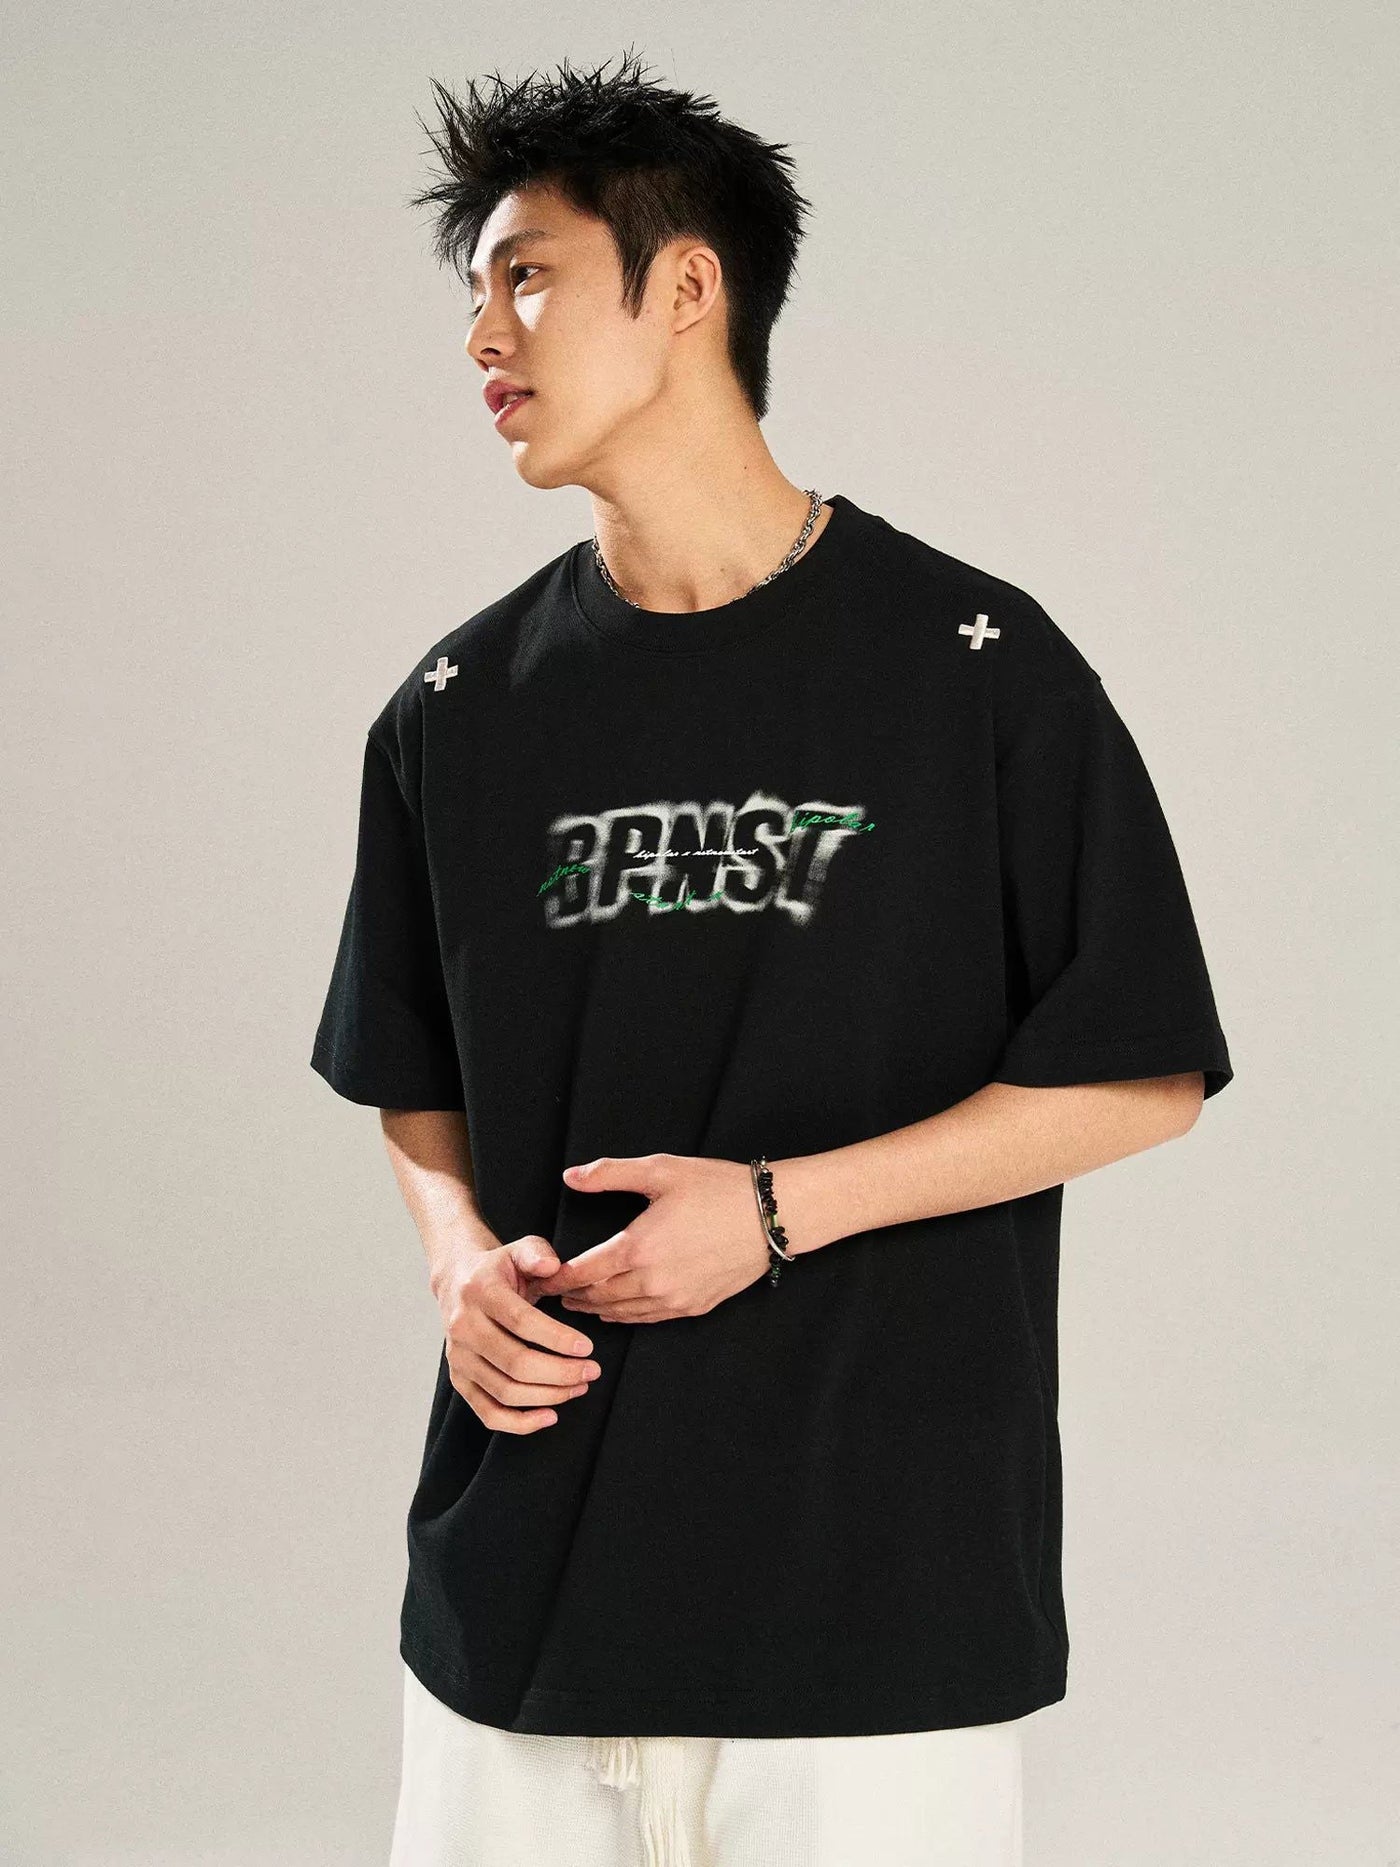 Motion Blur Logo T-Shirt Korean Street Fashion T-Shirt By New Start Shop Online at OH Vault